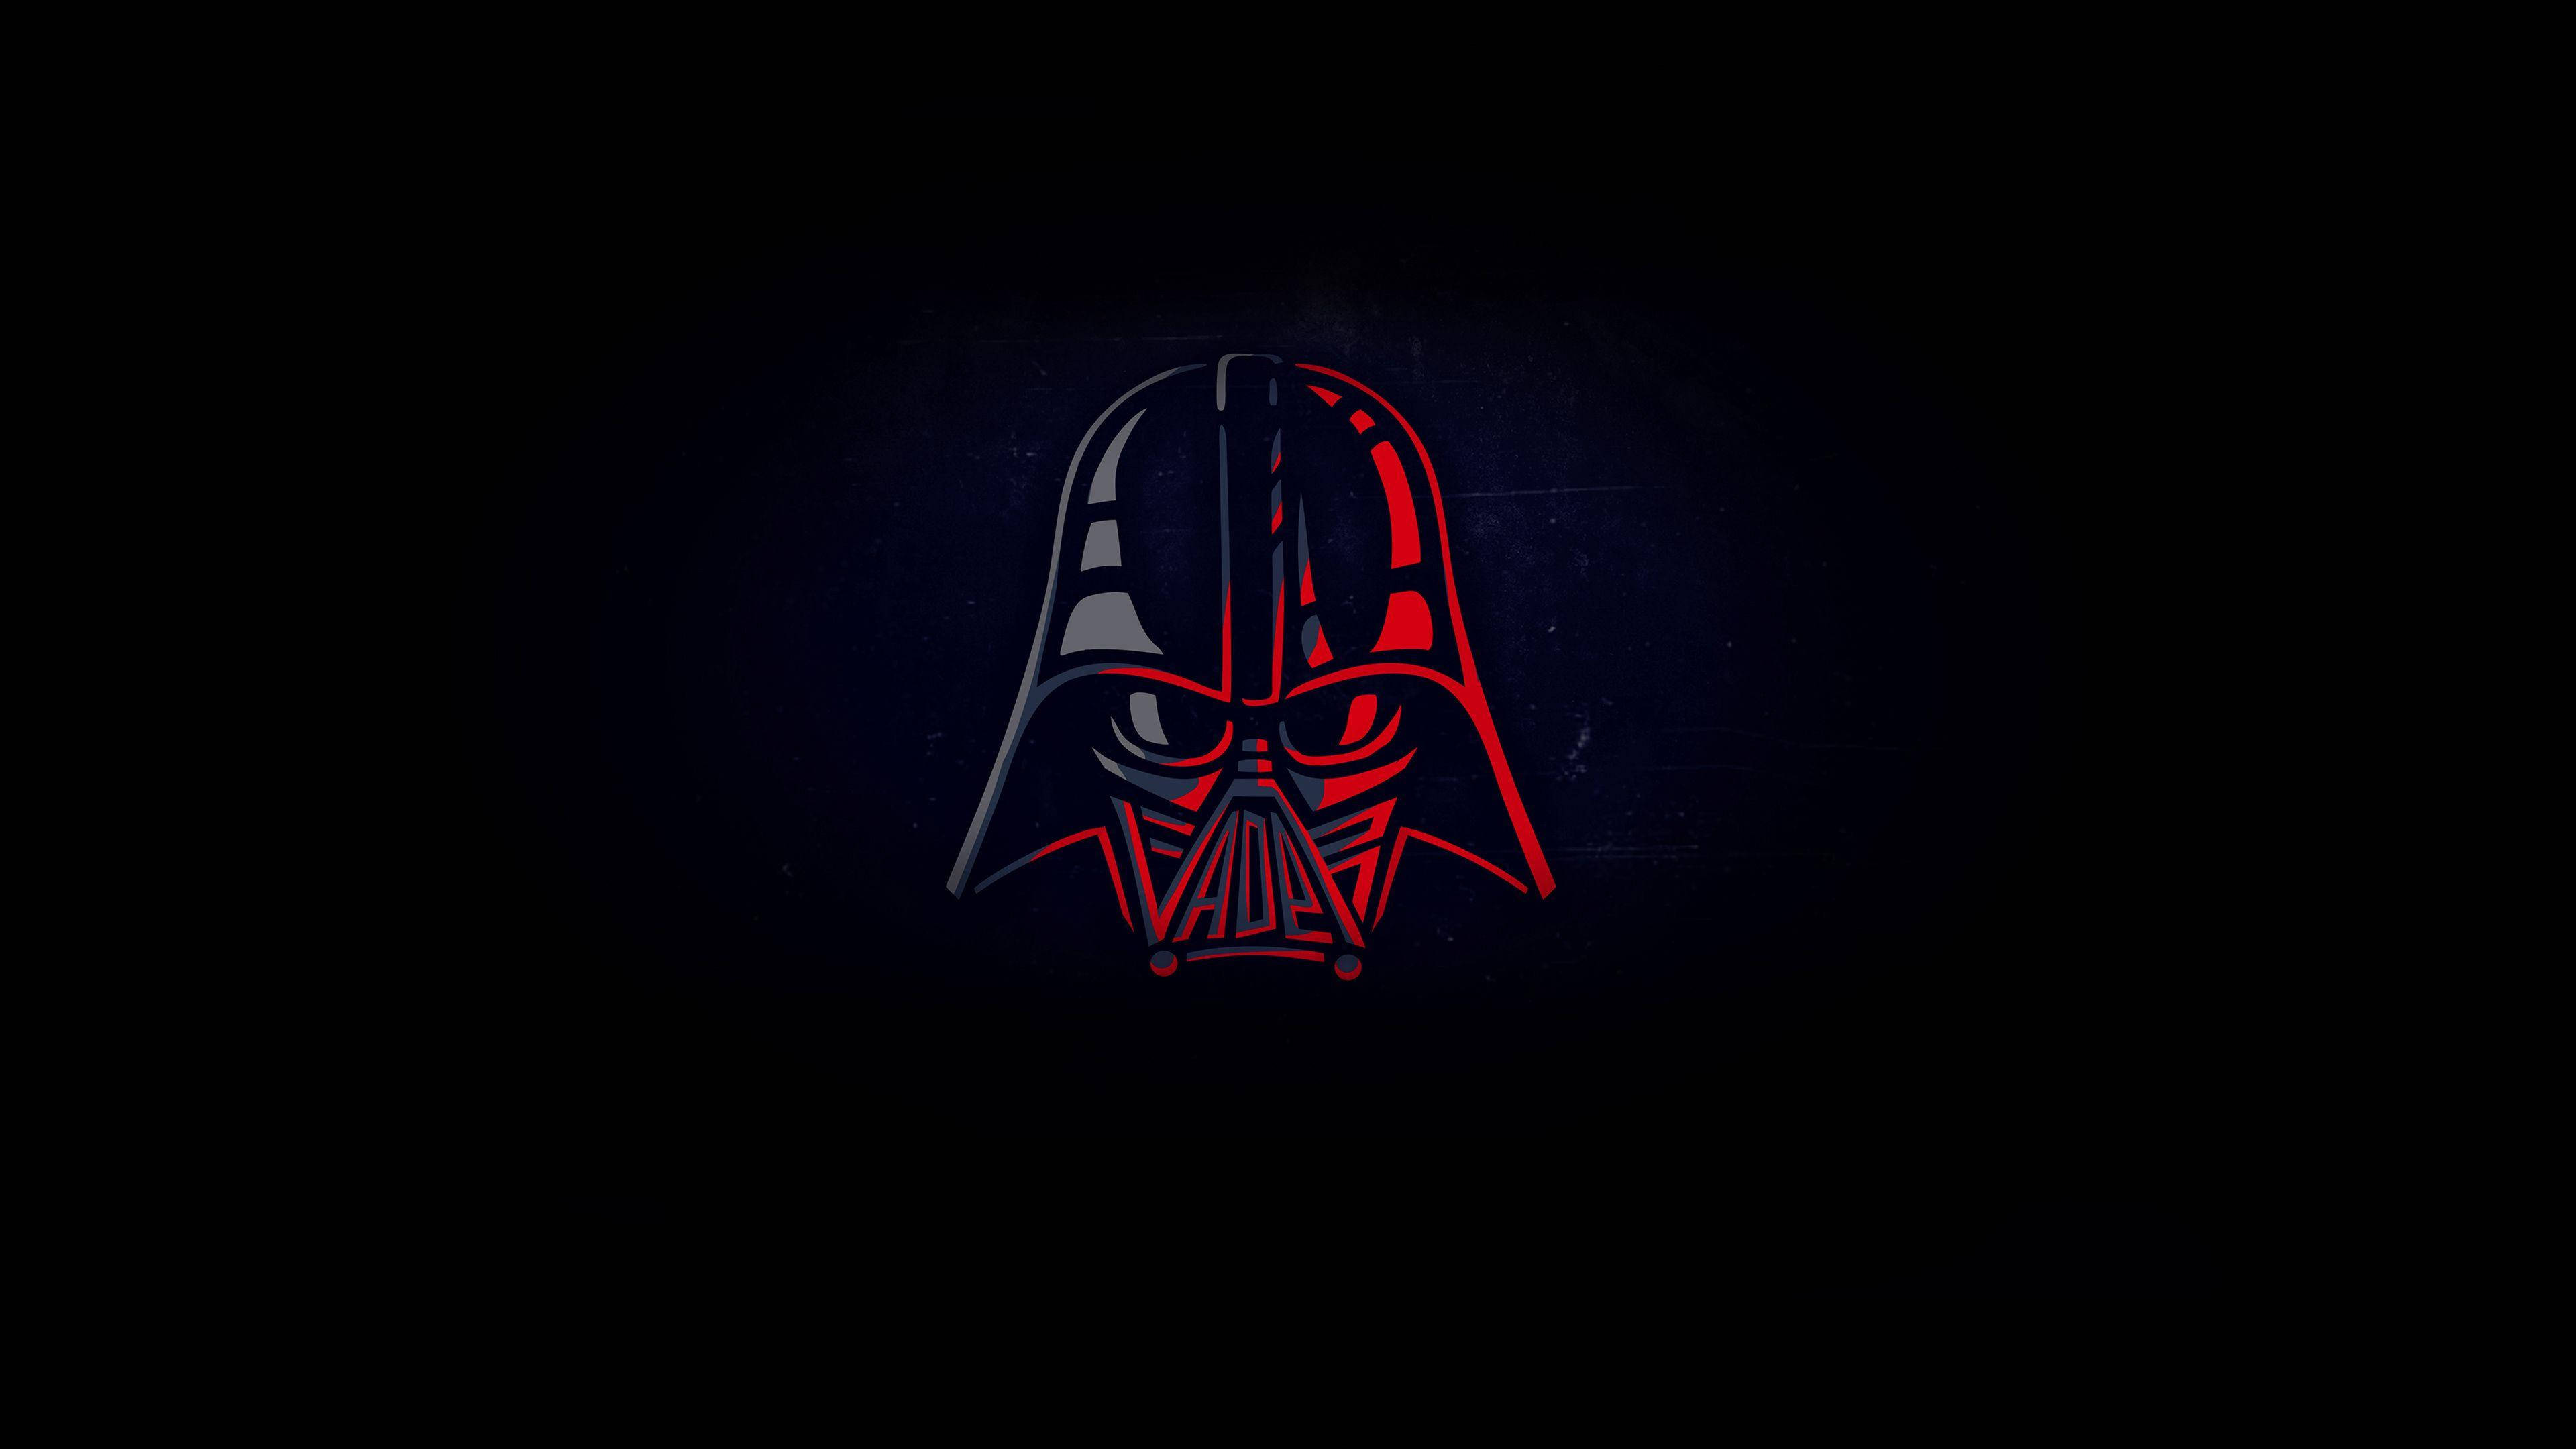 Darth Vaders Minimalist Star Wars Mask Background